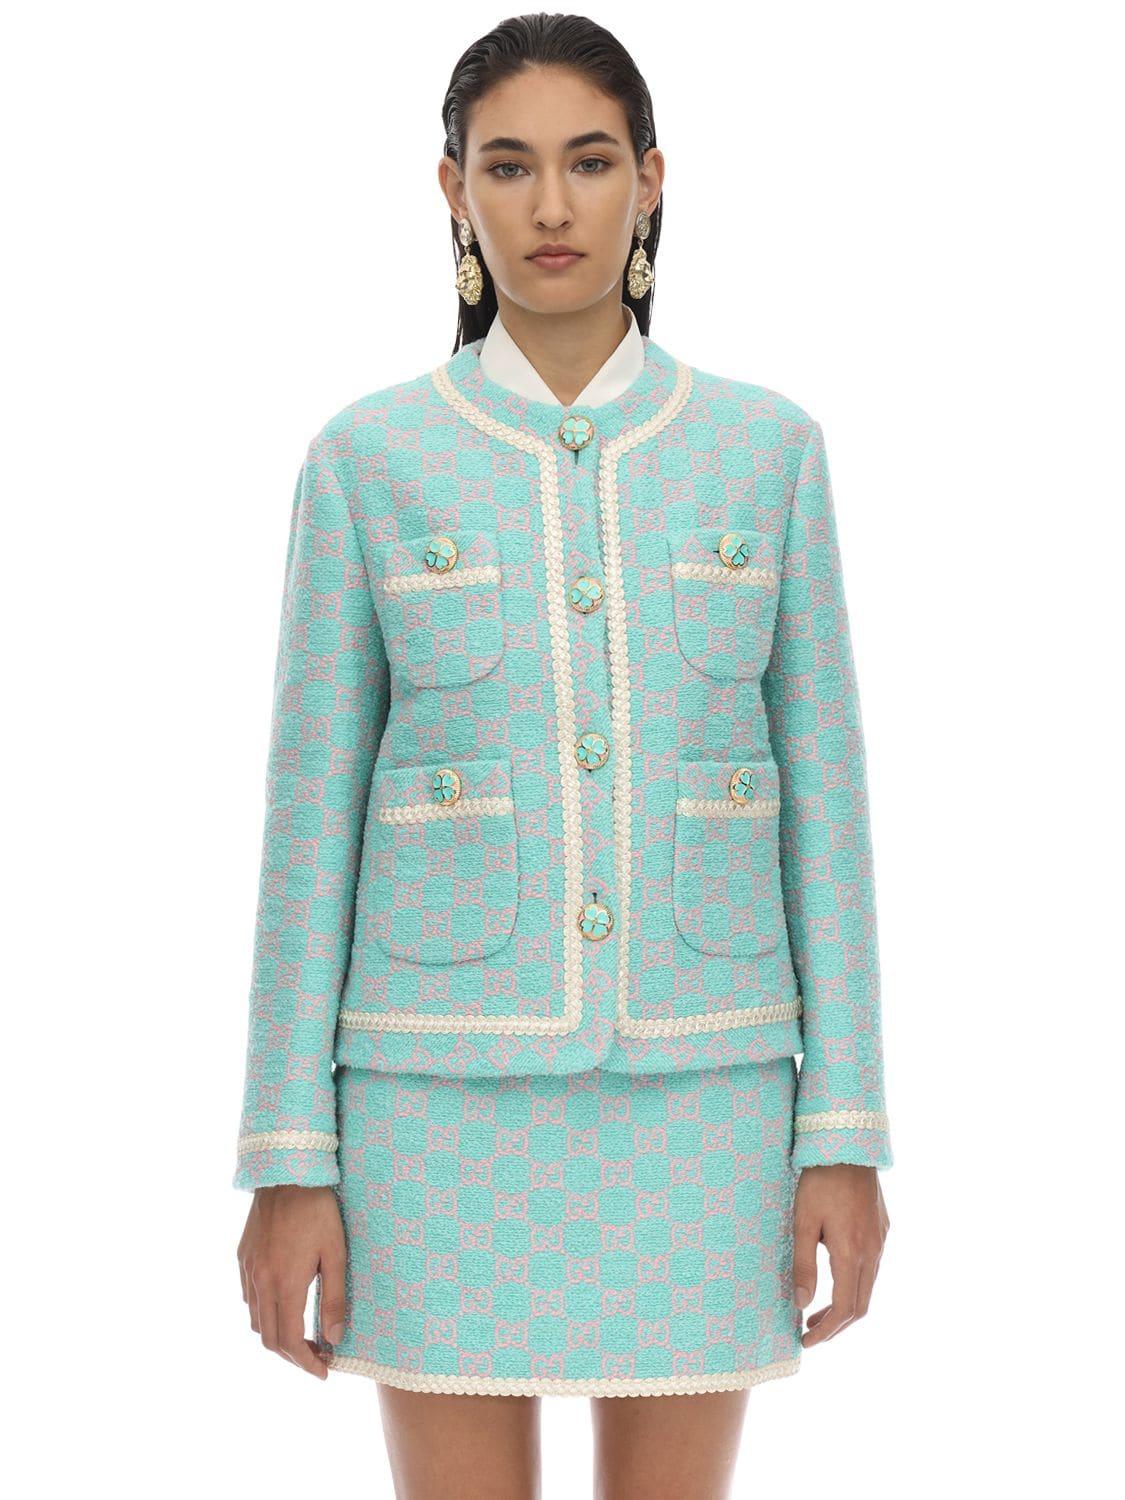 Gucci Gg Logo Cotton & Wool Tweed Jacket in Light Blue/Pink (Blue) | Lyst  Australia